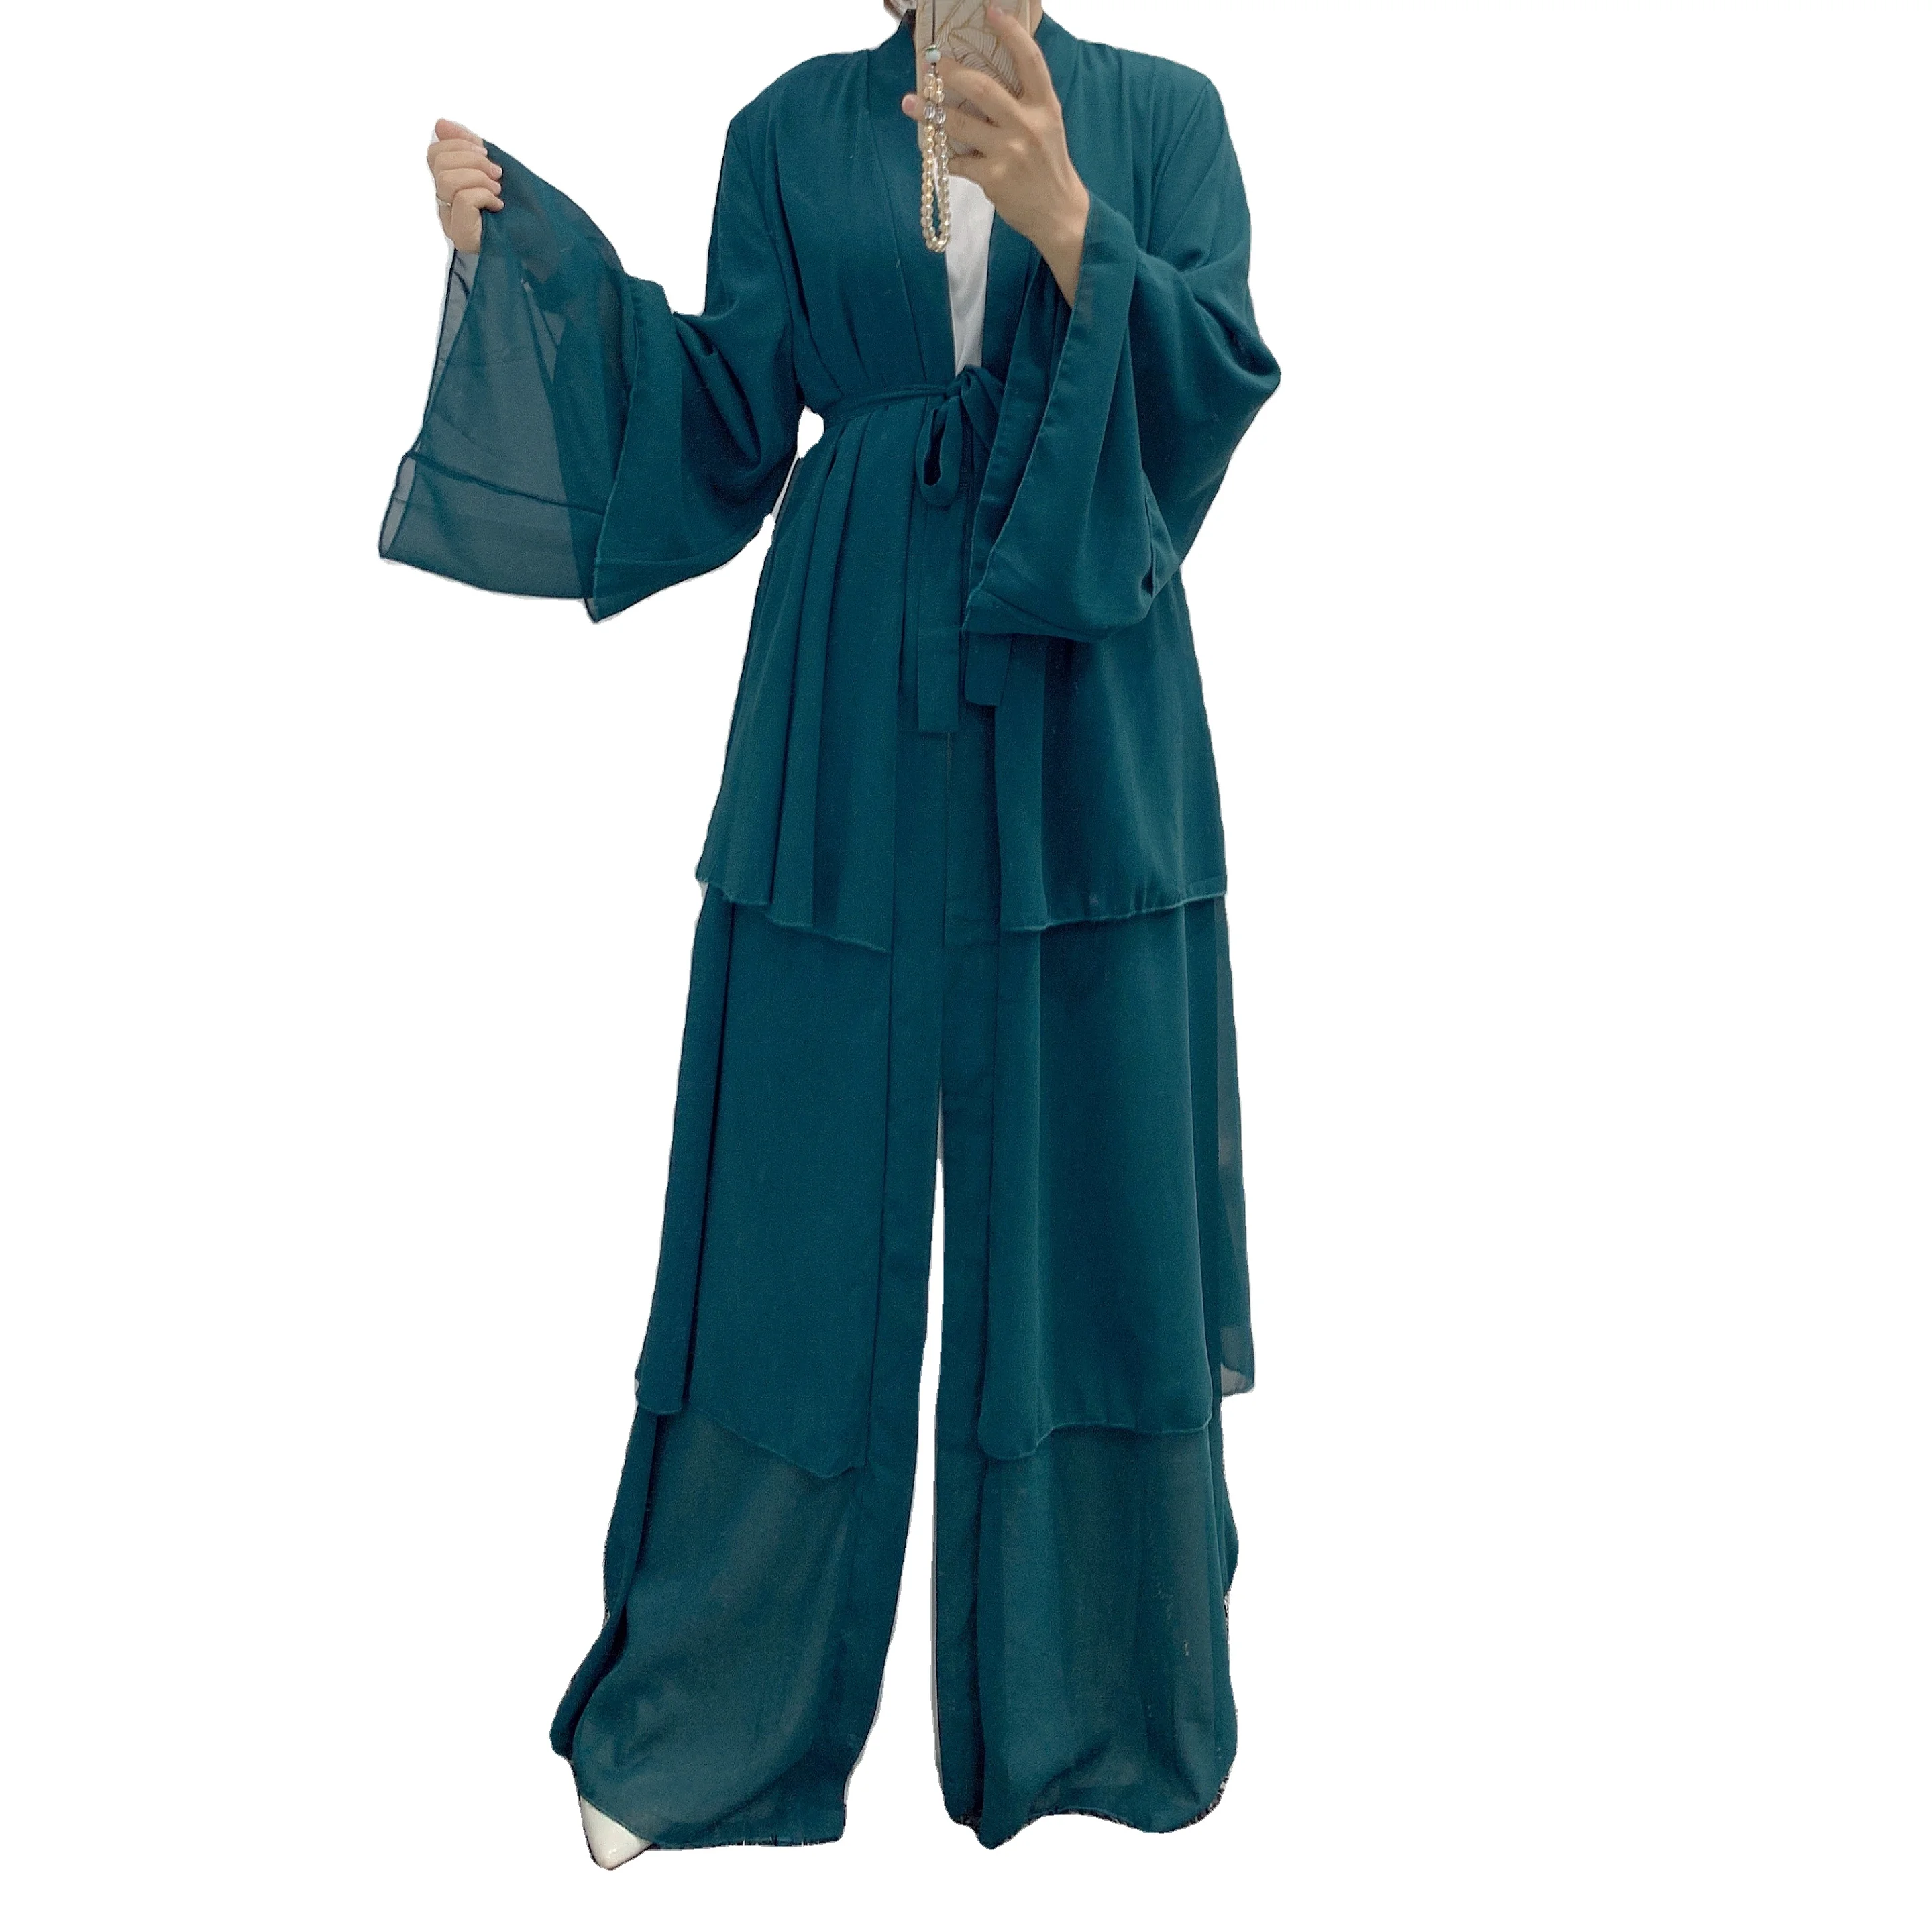 

High Quality Modest Solid Color Abaya Long Sleeve Satin Dress Islamic Clothing Women Turkish Women Summer Muslim Blue Dress, 4 colors